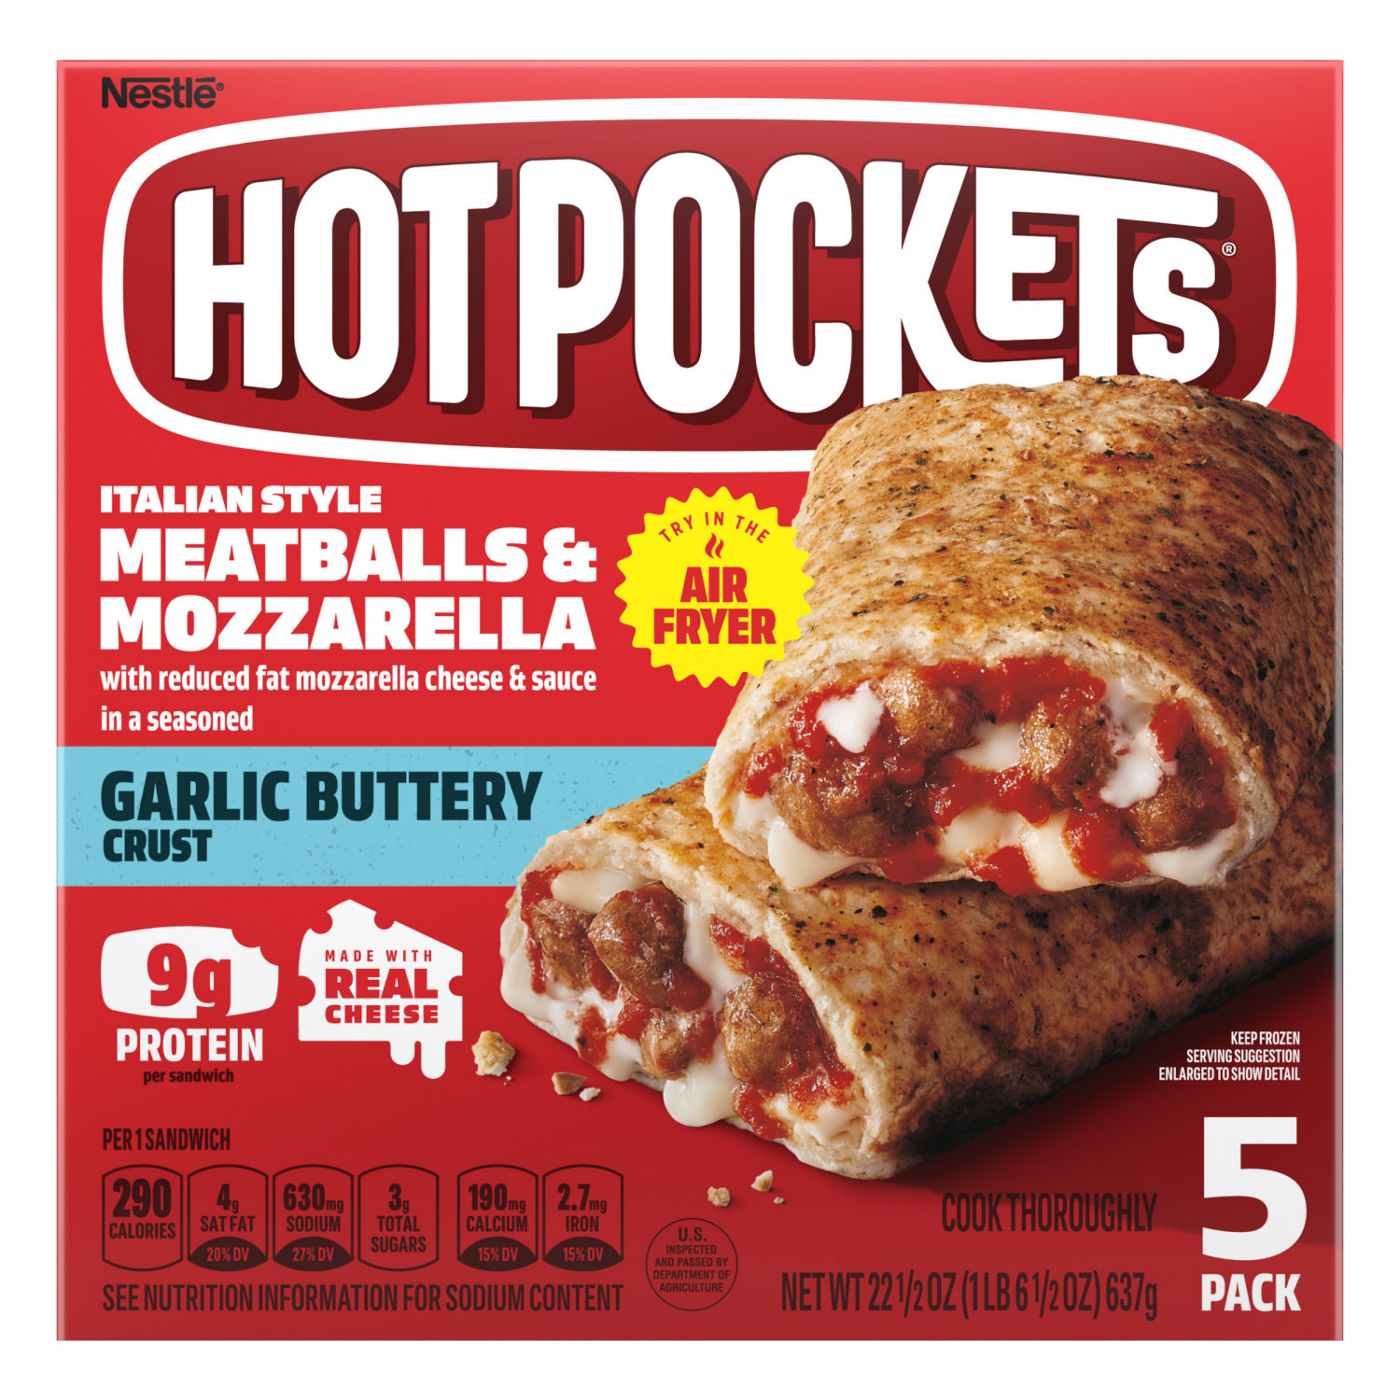 Hot Pockets Italian-Style Meatballs & Mozzarella Frozen Sandwiches - Garlic Buttery Crust; image 1 of 8